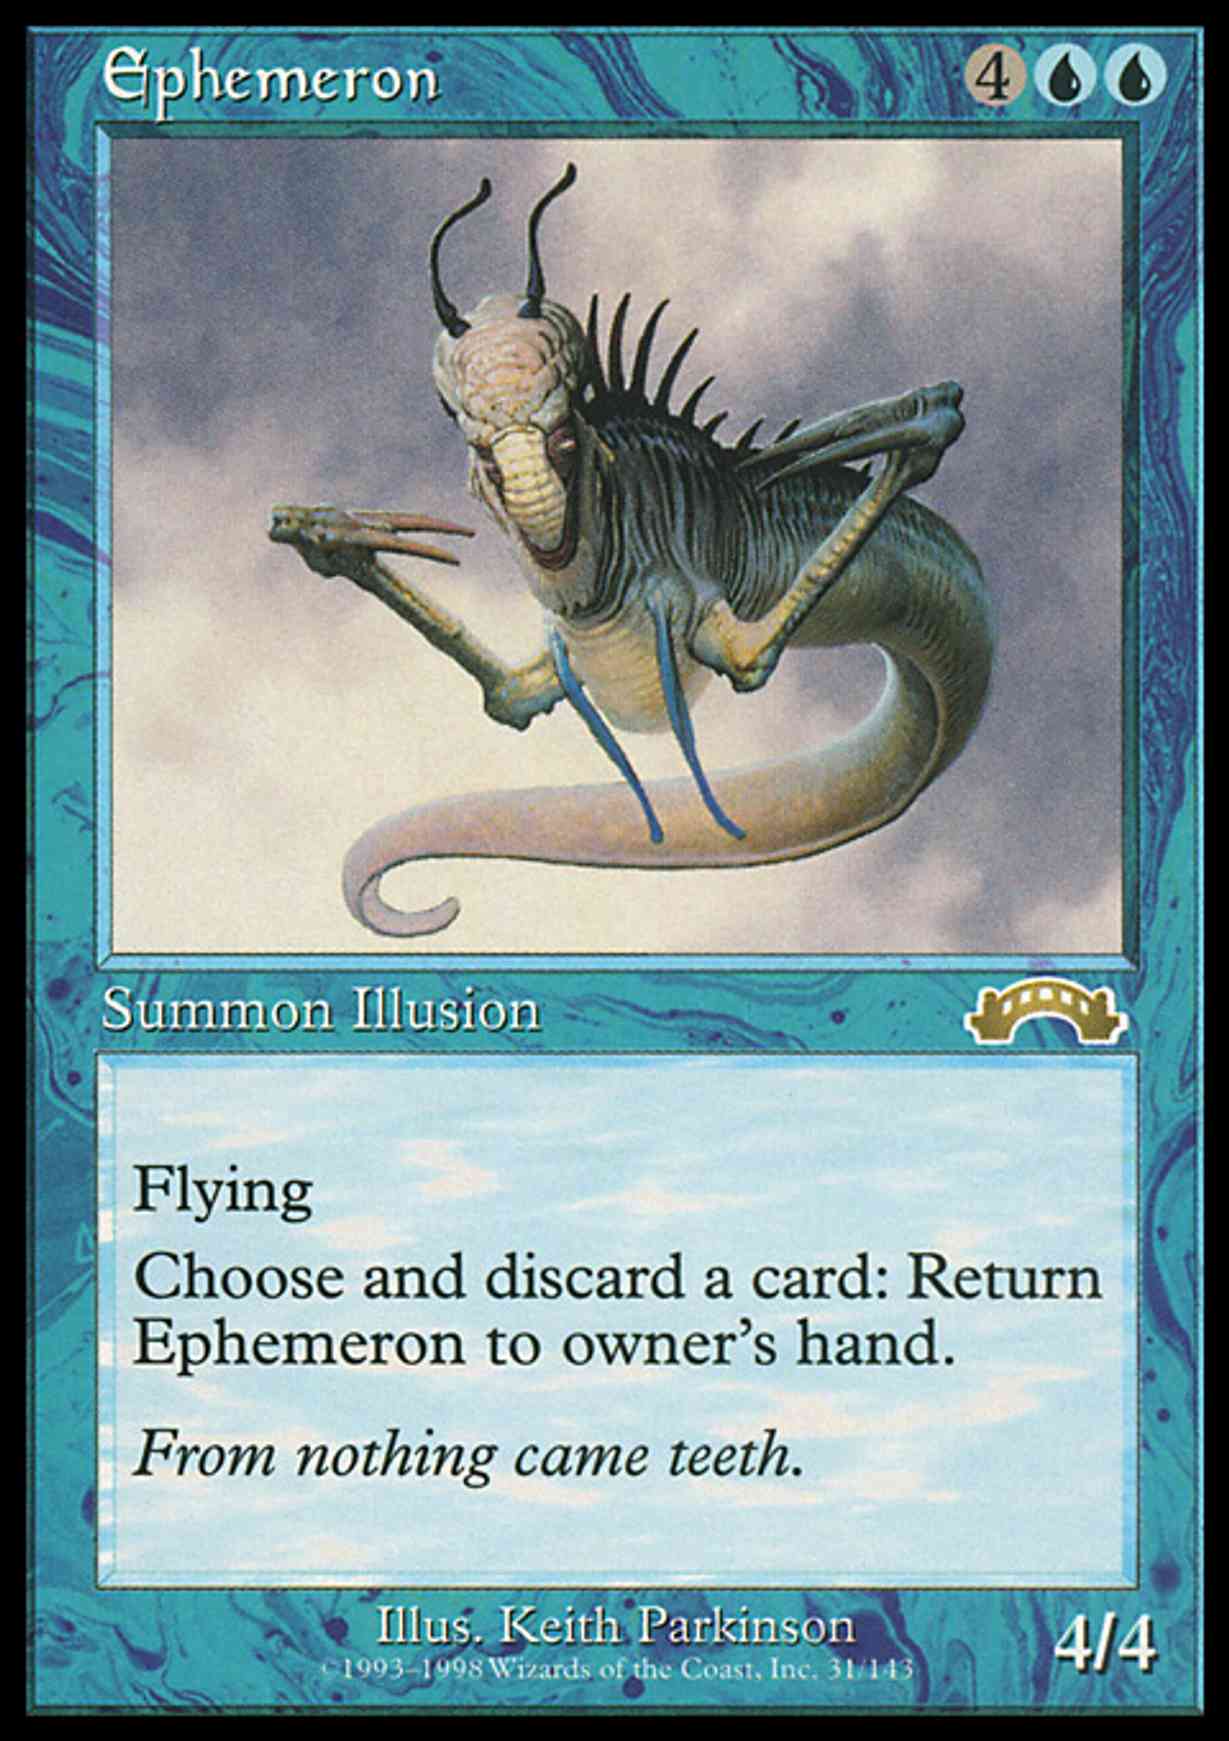 Ephemeron magic card front